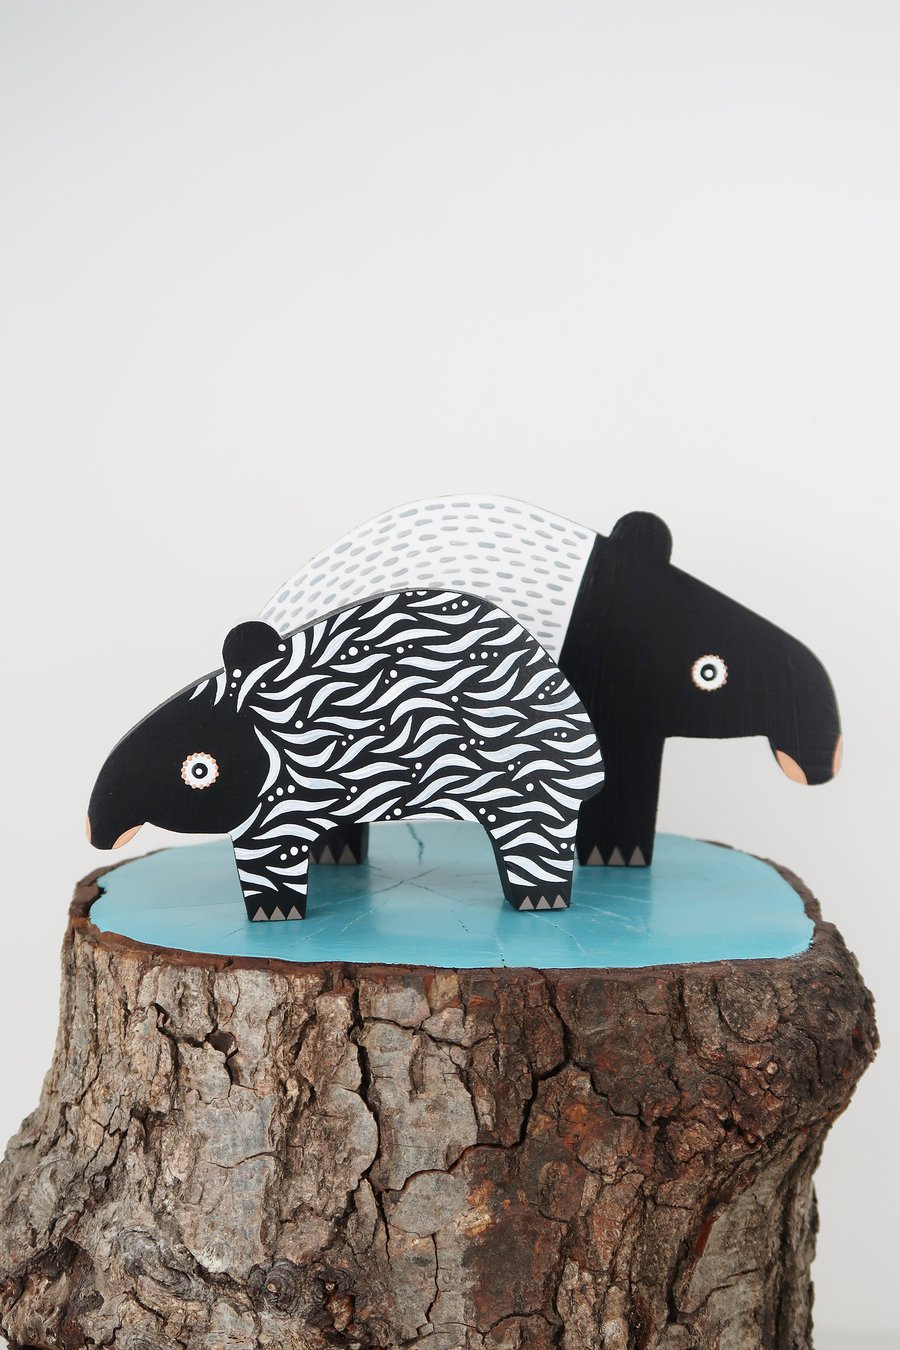 Malayan tapir wooden ornaments, set of 2, animal lover gift.